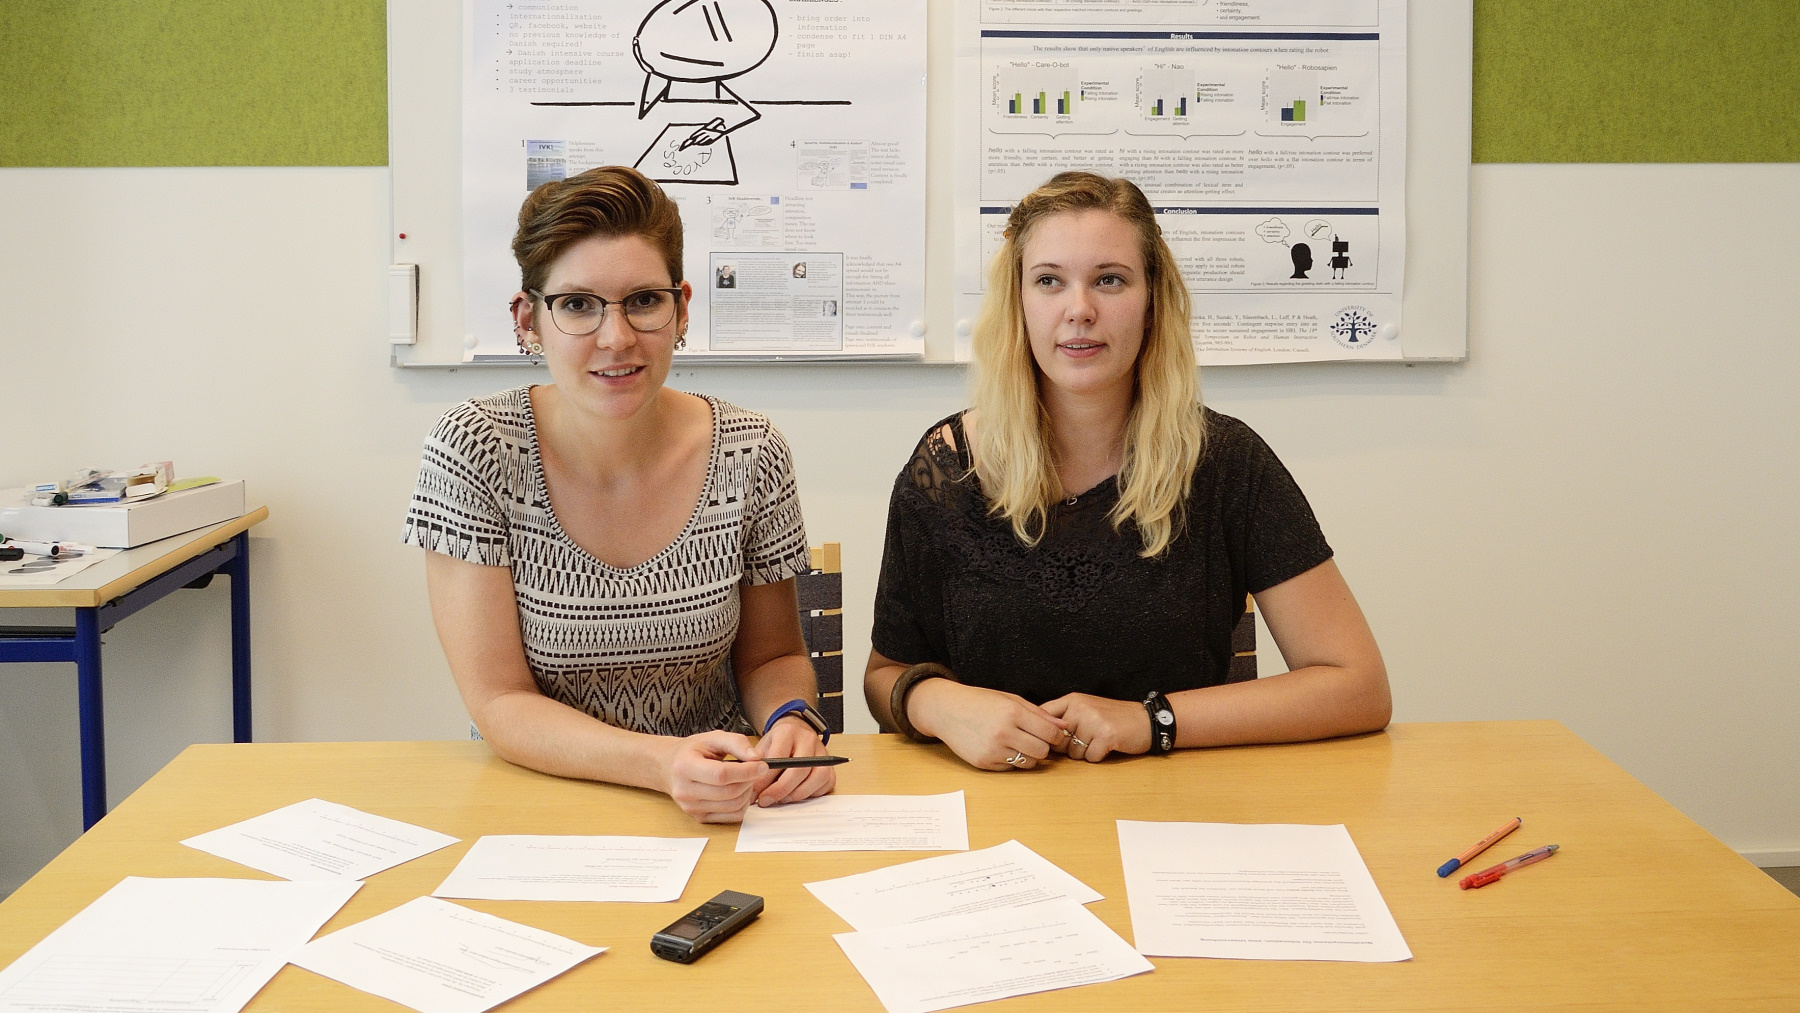 Nathalie Schümchen and Rosalyn M. Langedijk developing a concept in the HRI-lab Sønderborg.